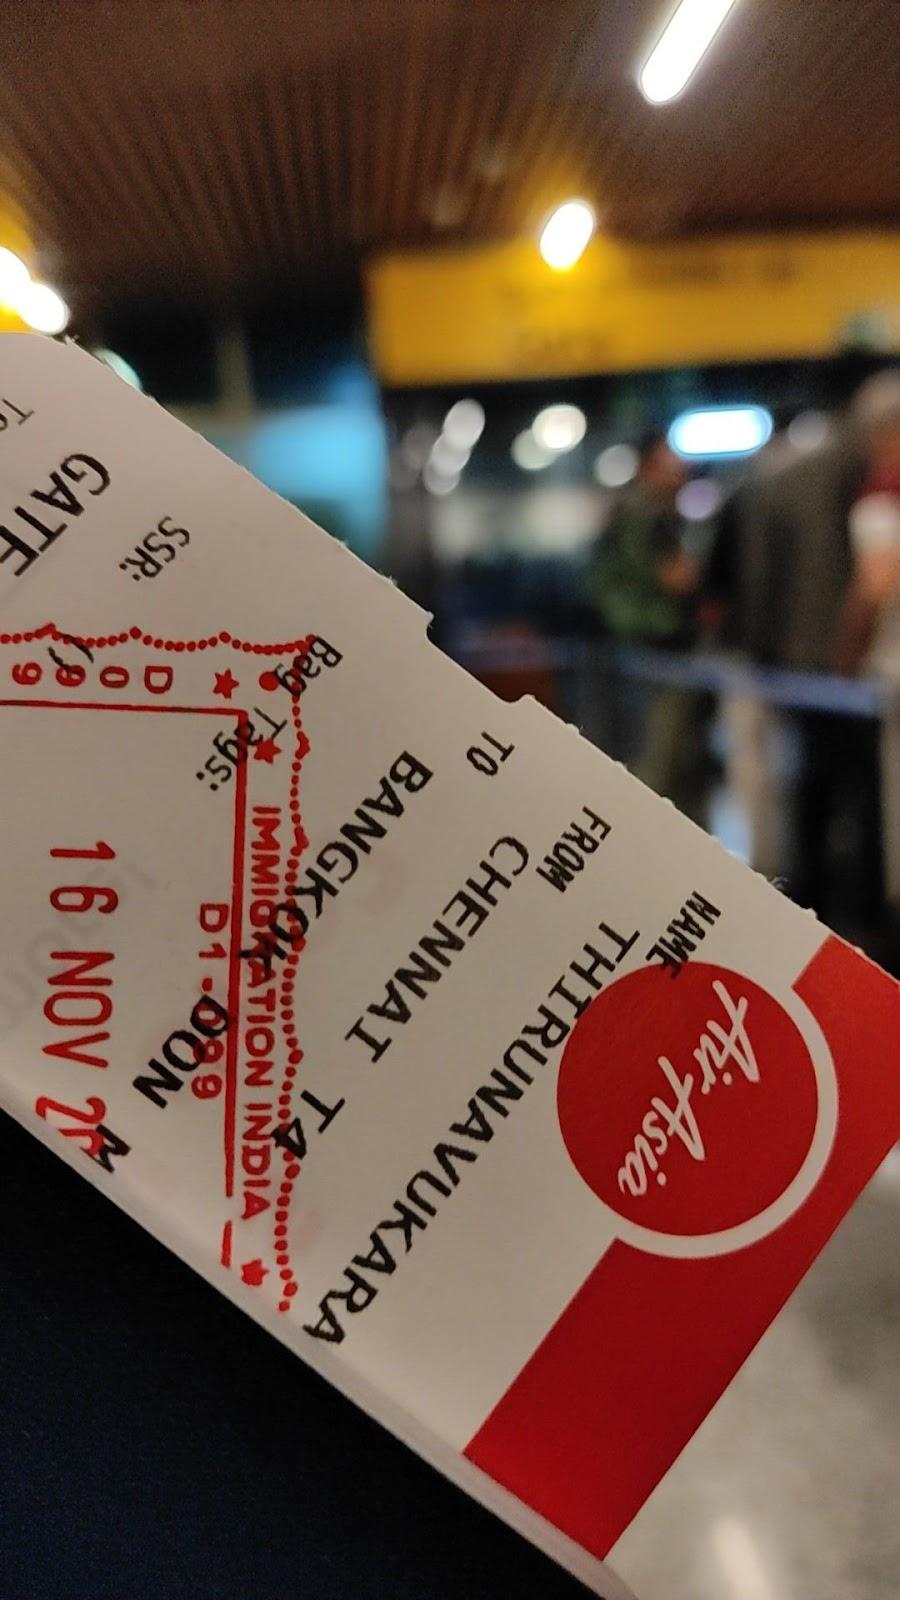 AirAsia Boarding pass from Chennai to Bangkok.